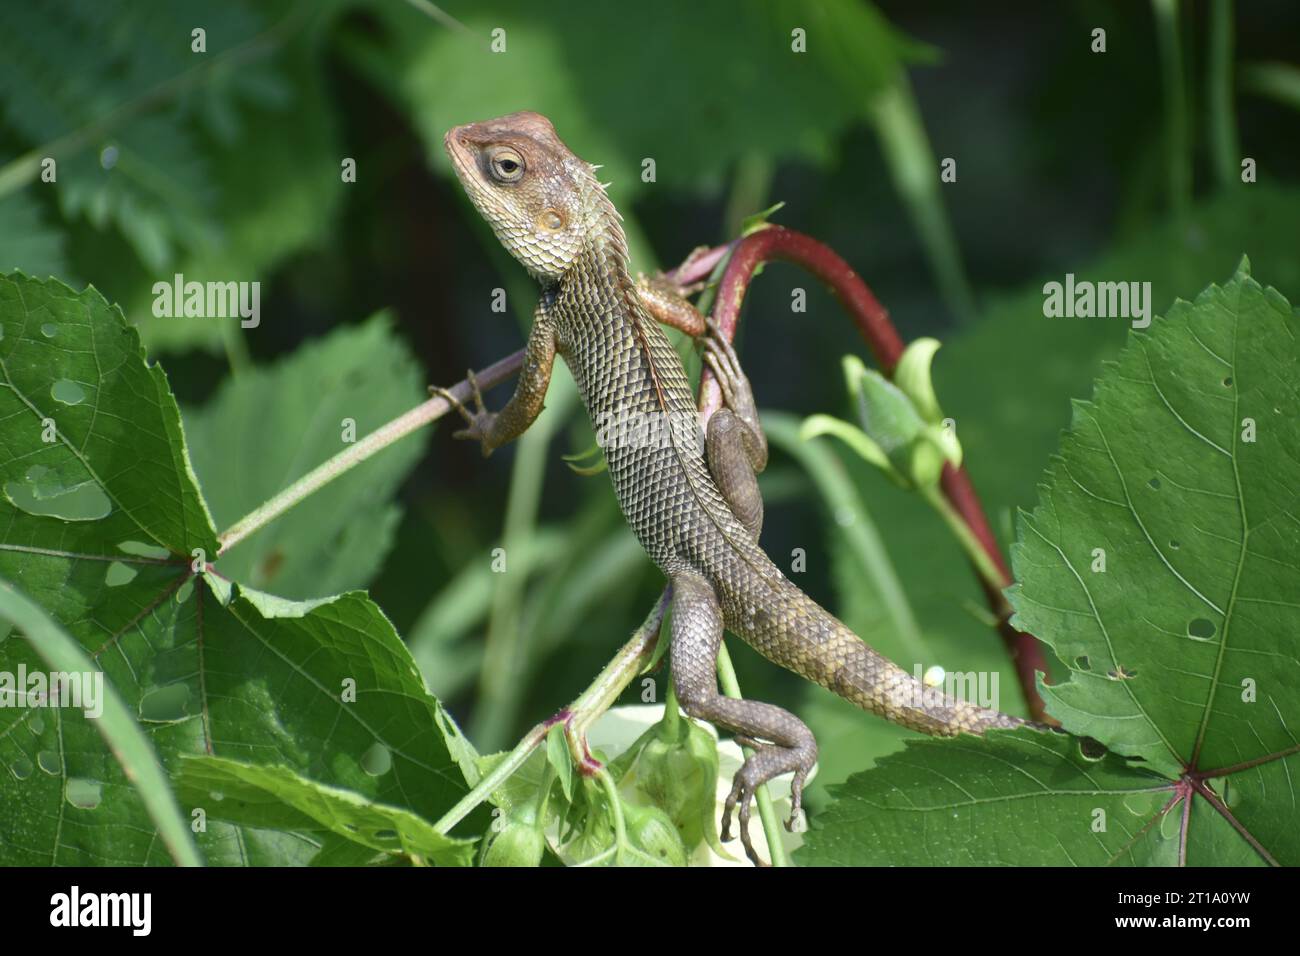 lizard on branch, lizard sunbathing on branch, green lizard climb on wood Stock Photo